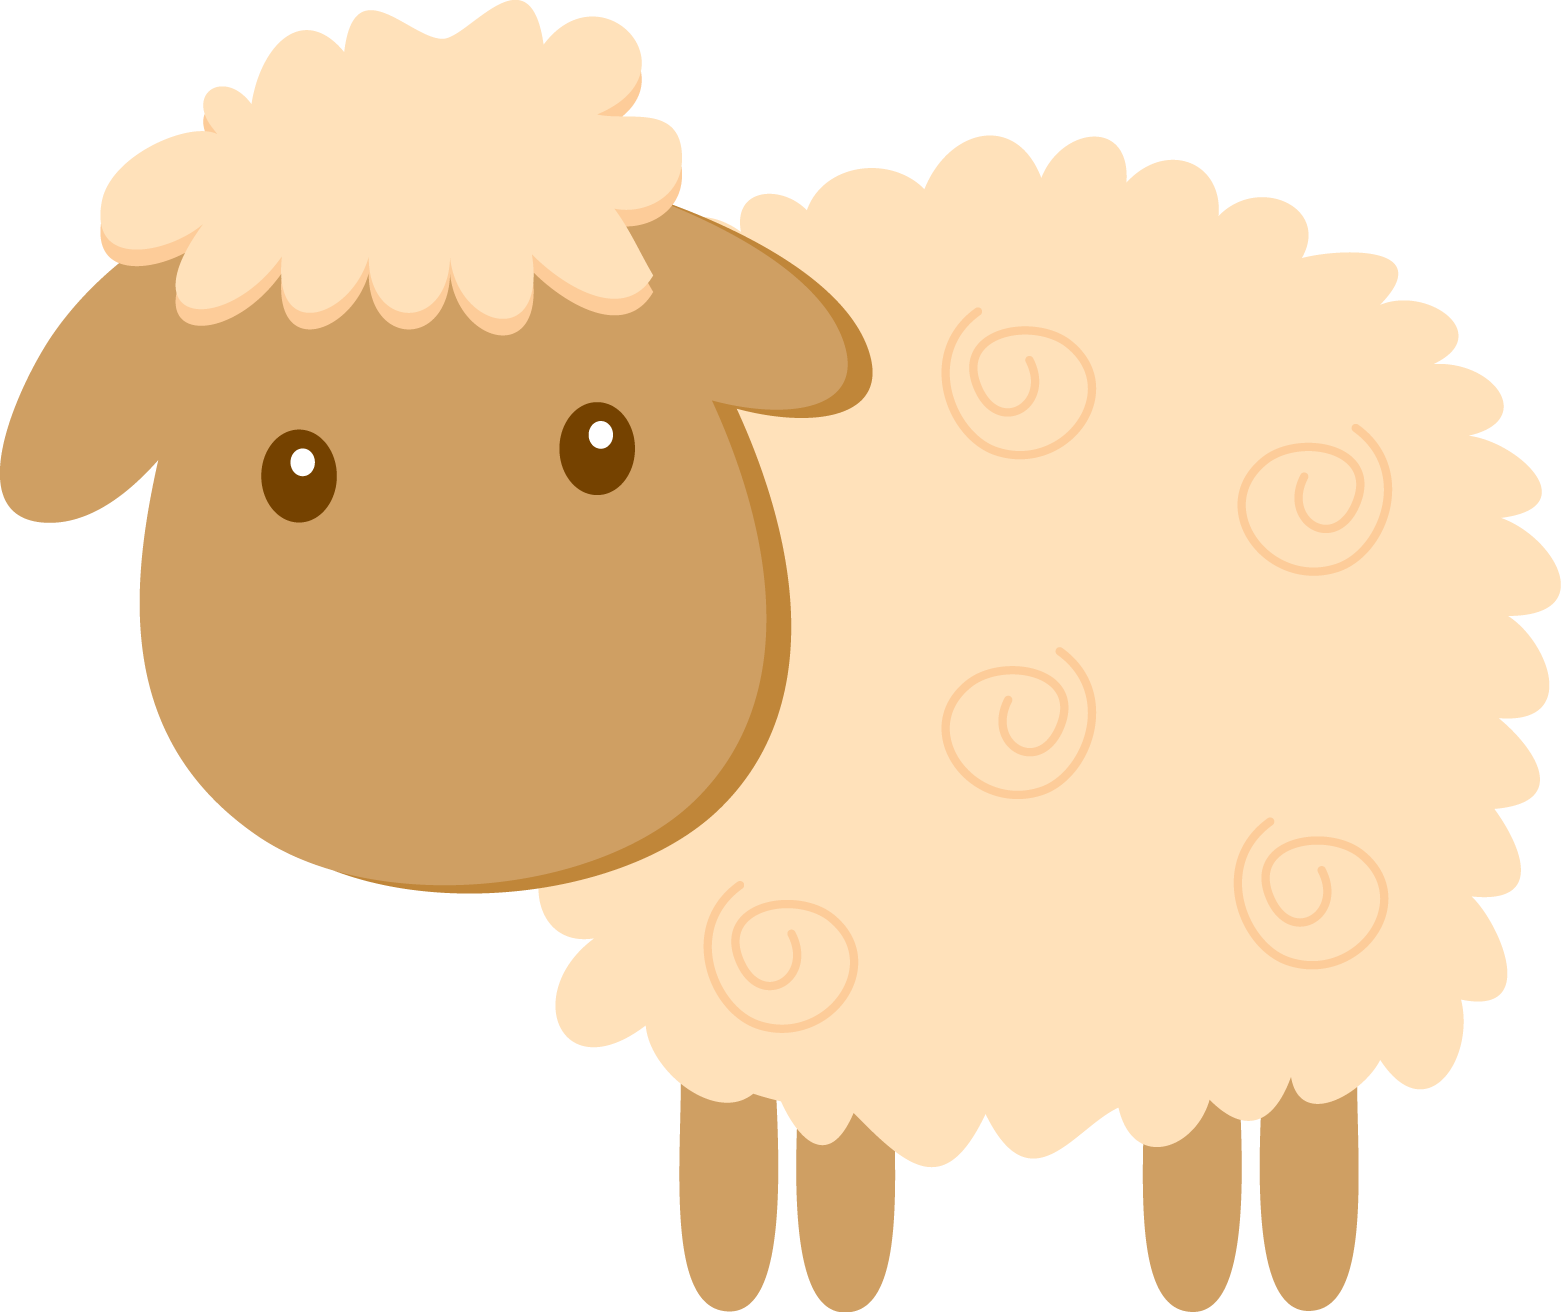 Cute sheep clipart png. Sheep